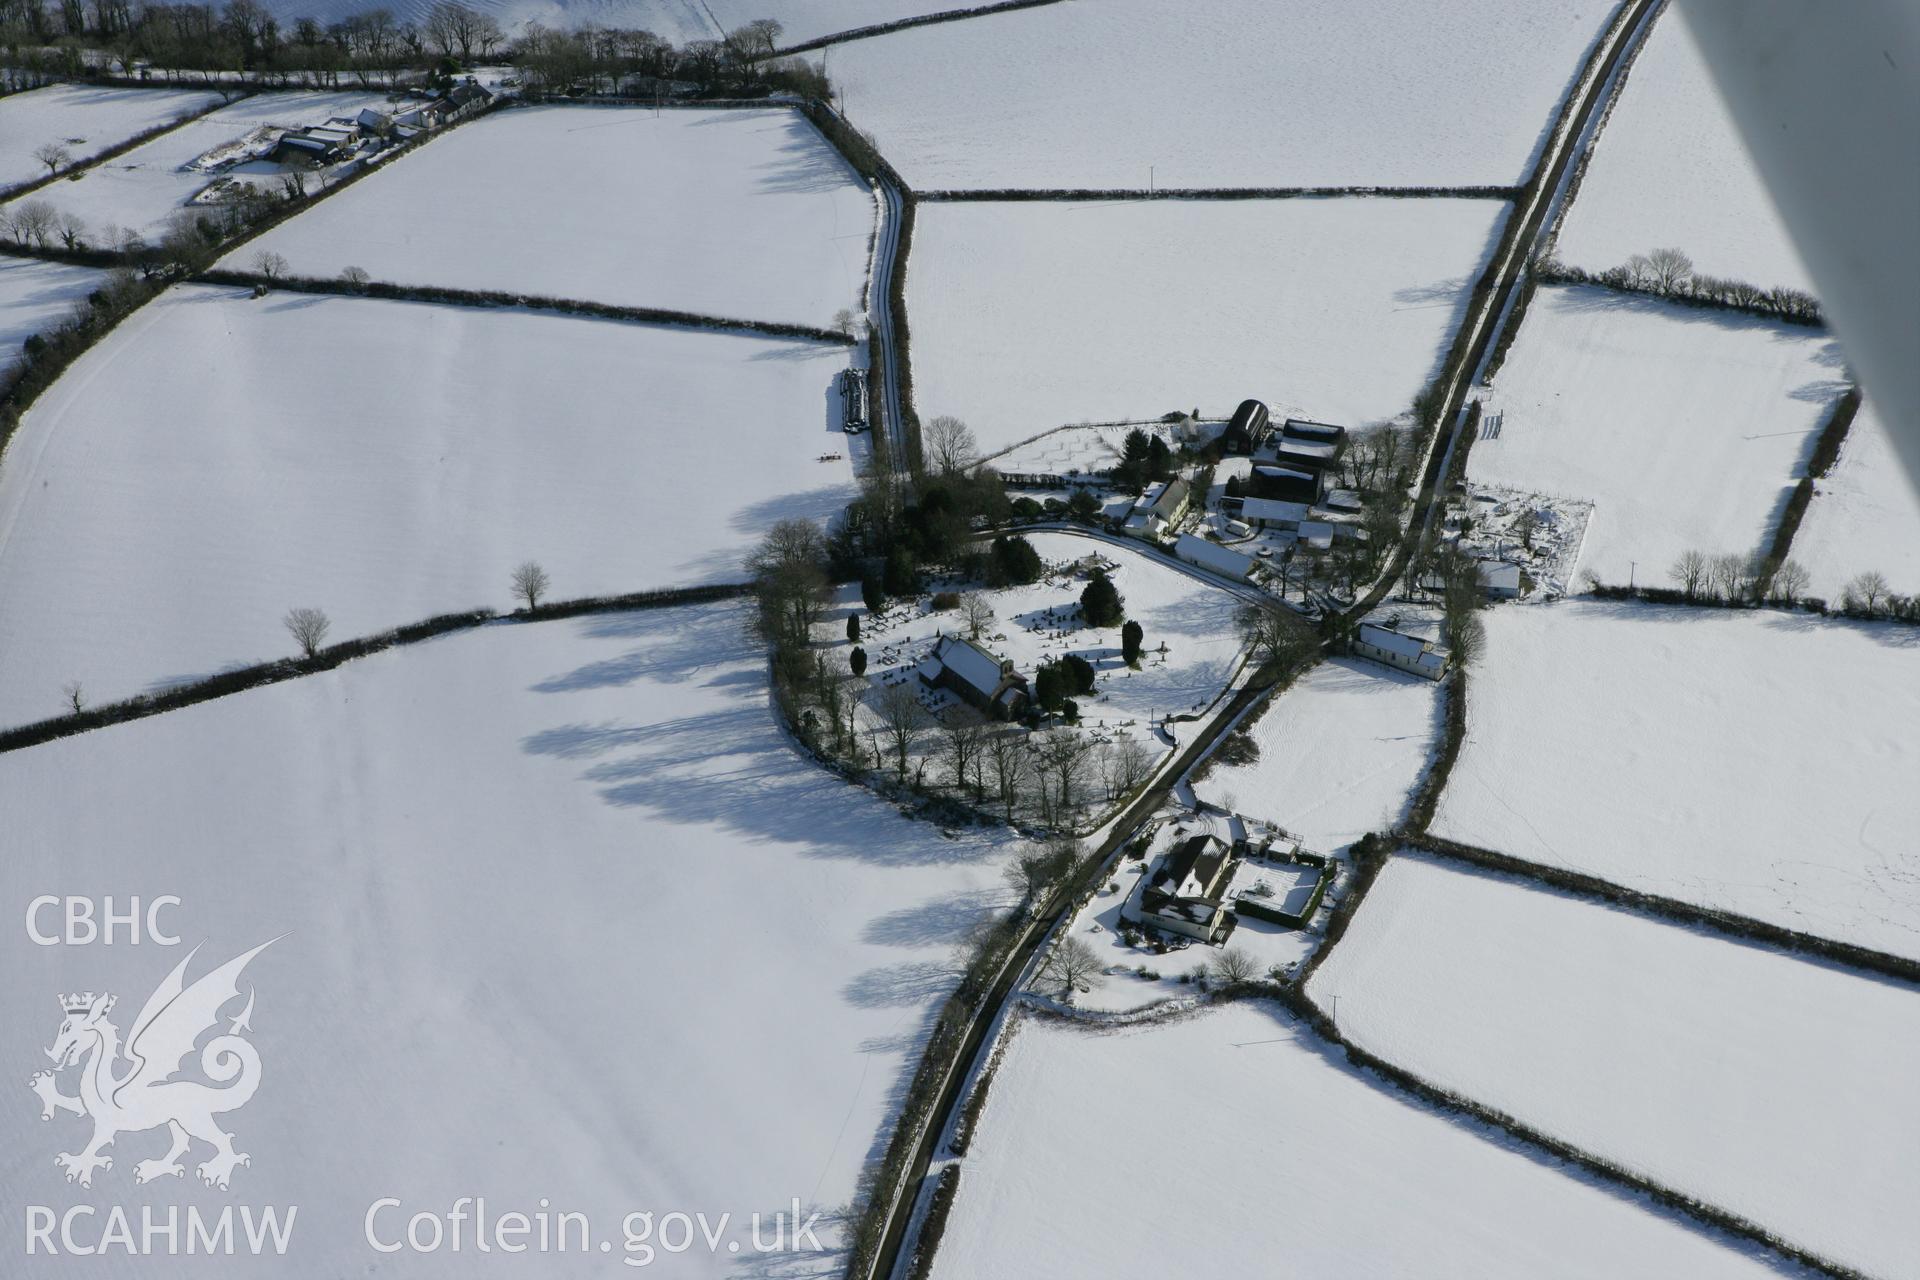 RCAHMW colour oblique photograph of Llanwinio Church, winter landscape. Taken by Toby Driver on 06/02/2009.